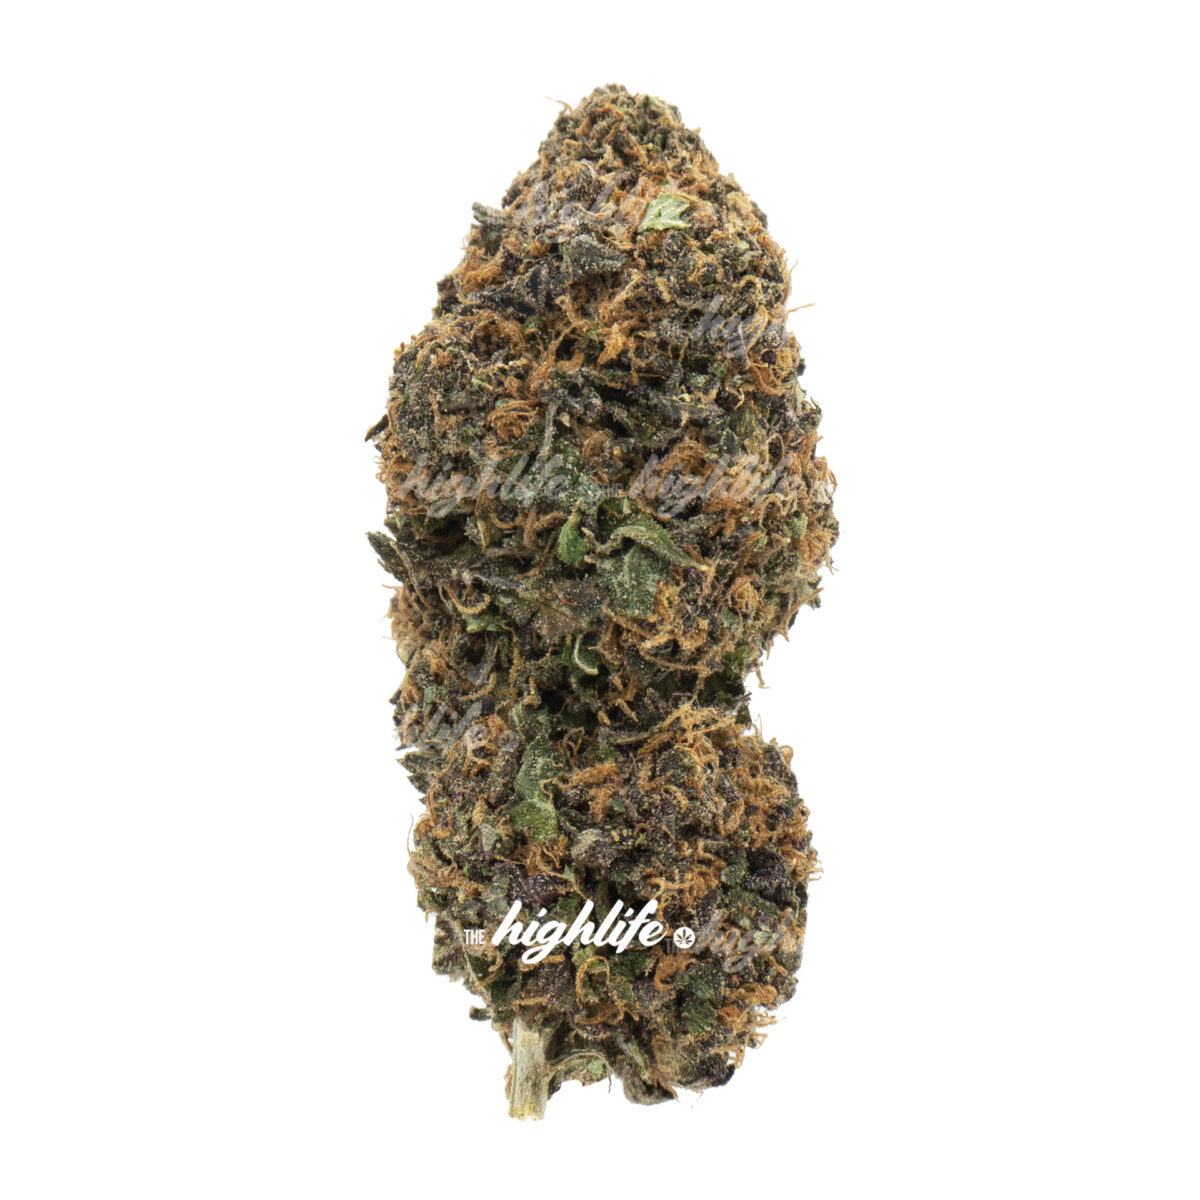 Incredible Hulk cannabis weed strain